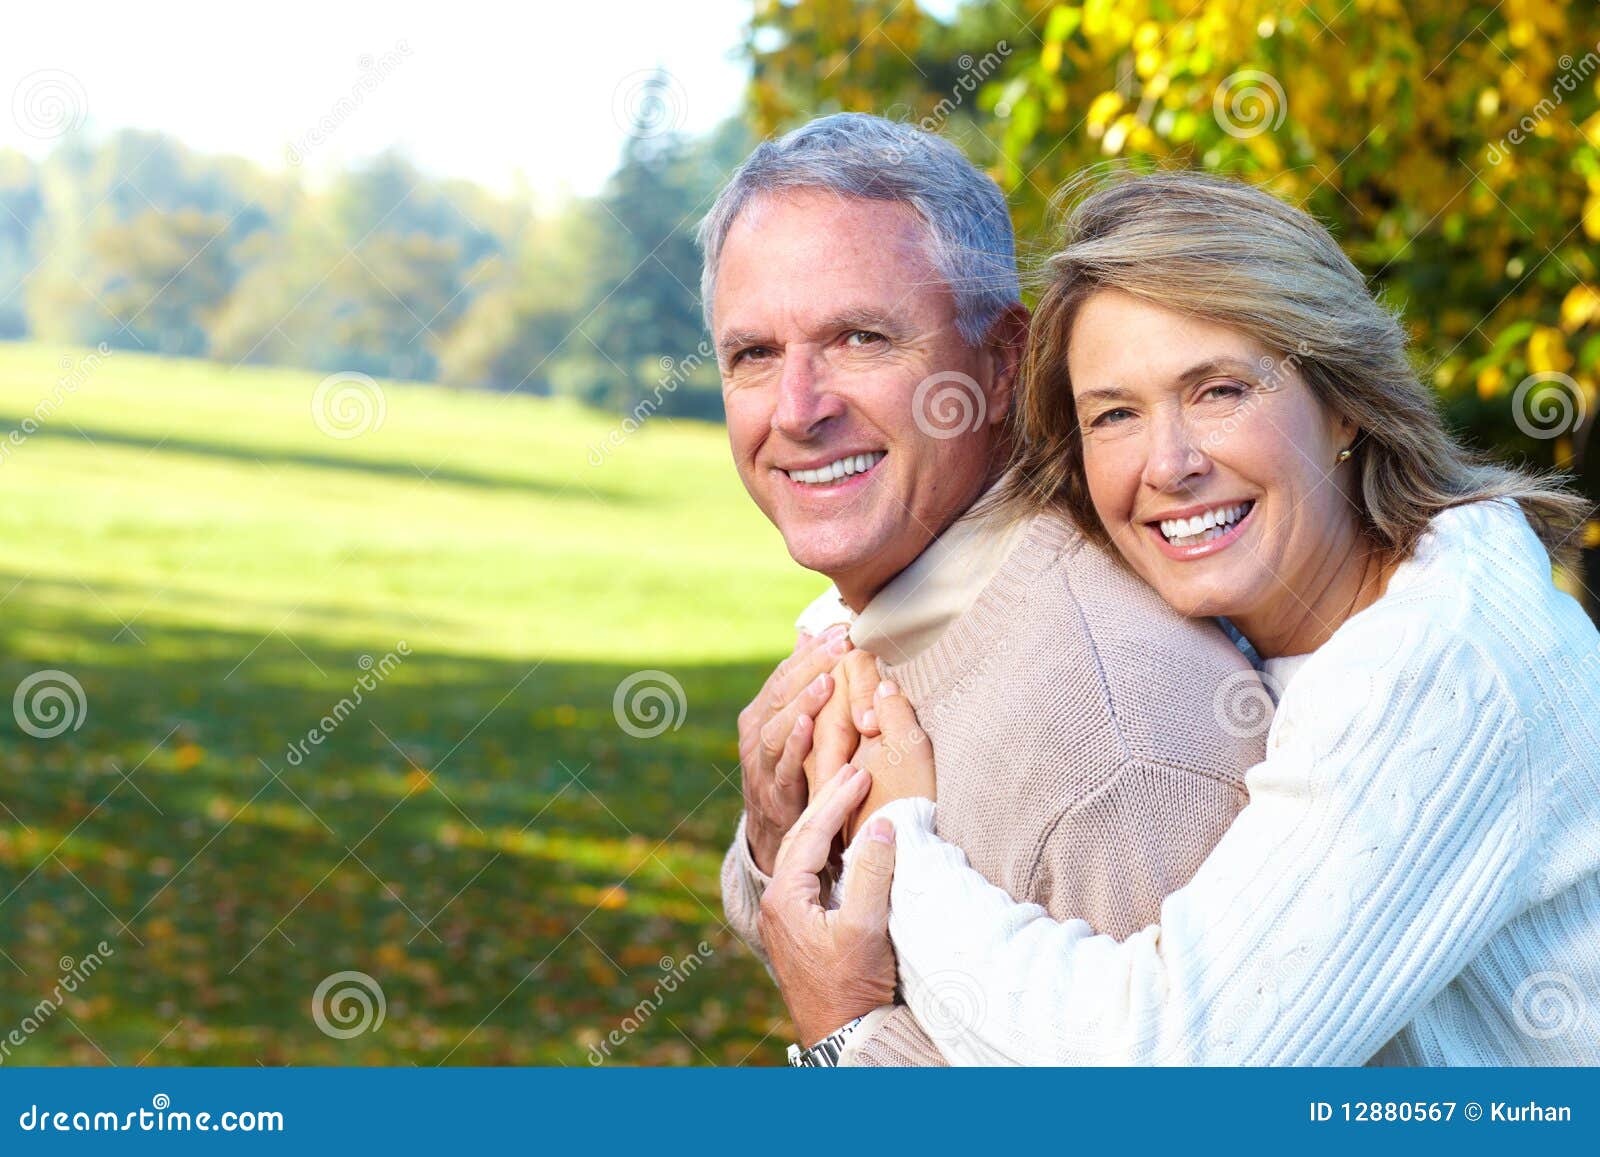 elderly seniors couple